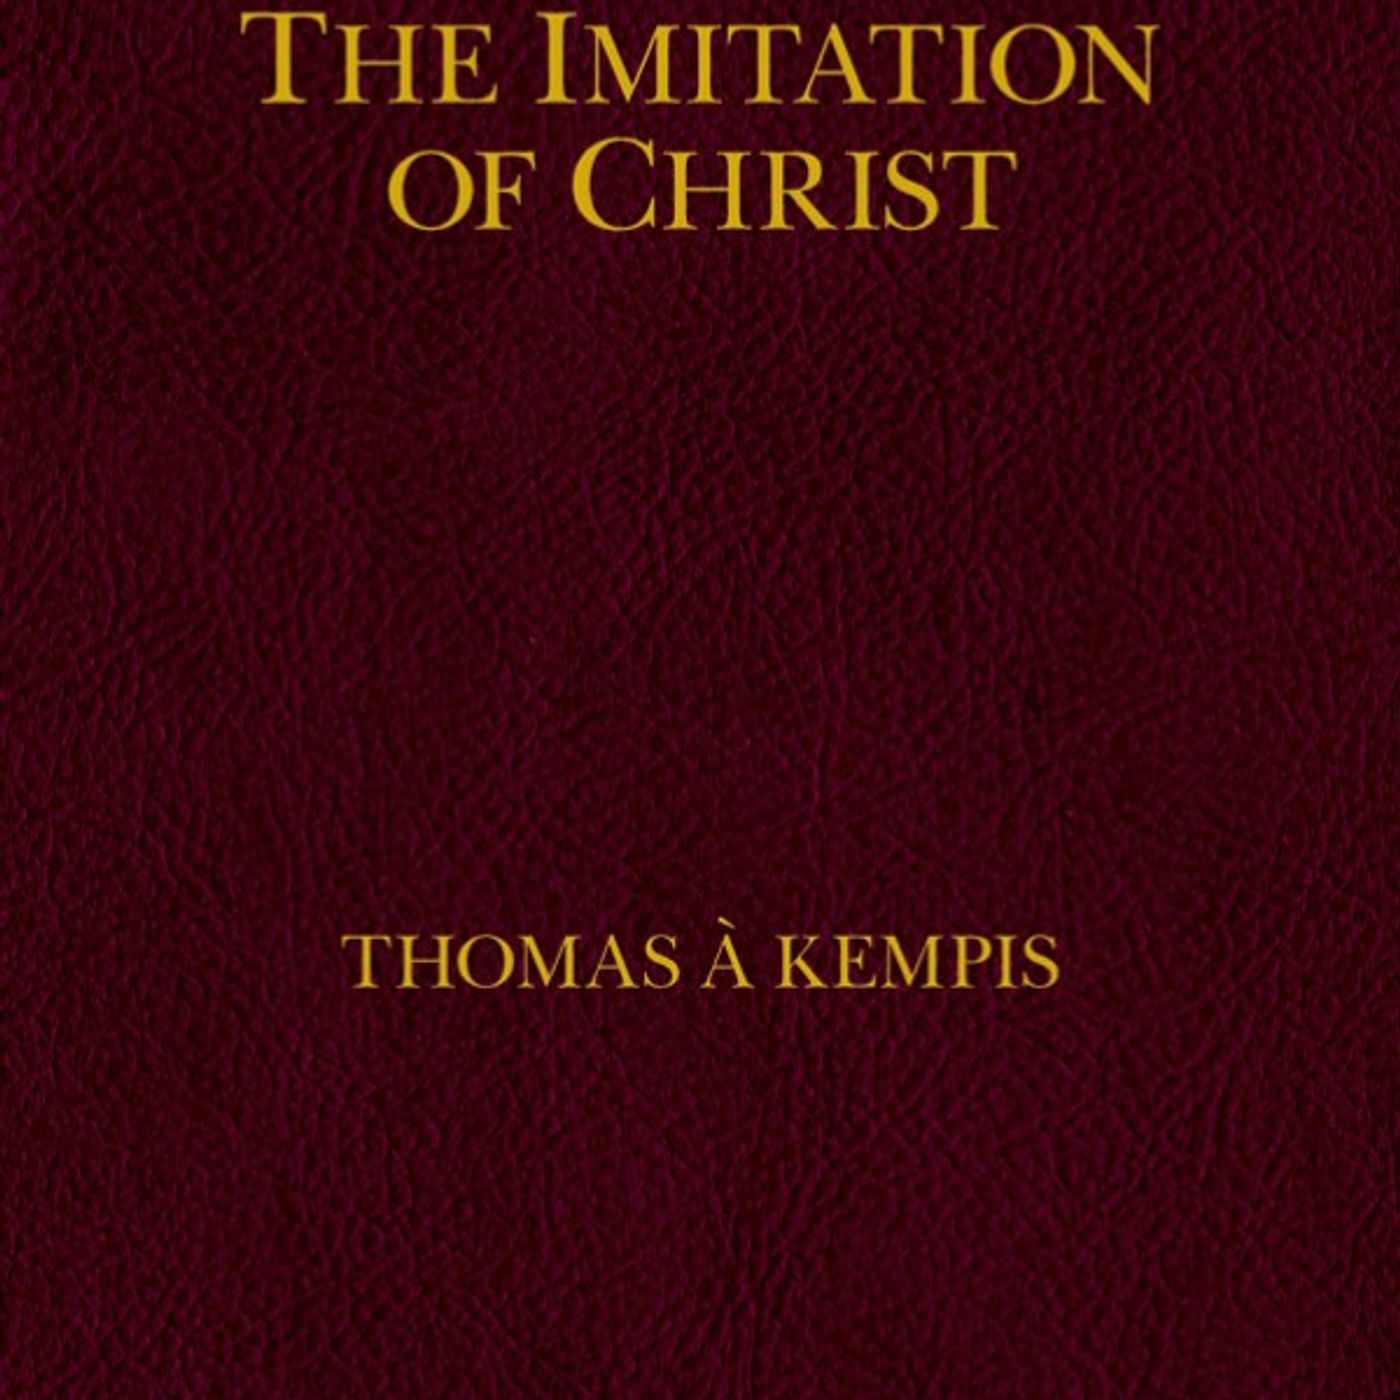 Imitation of Christ Pt 2